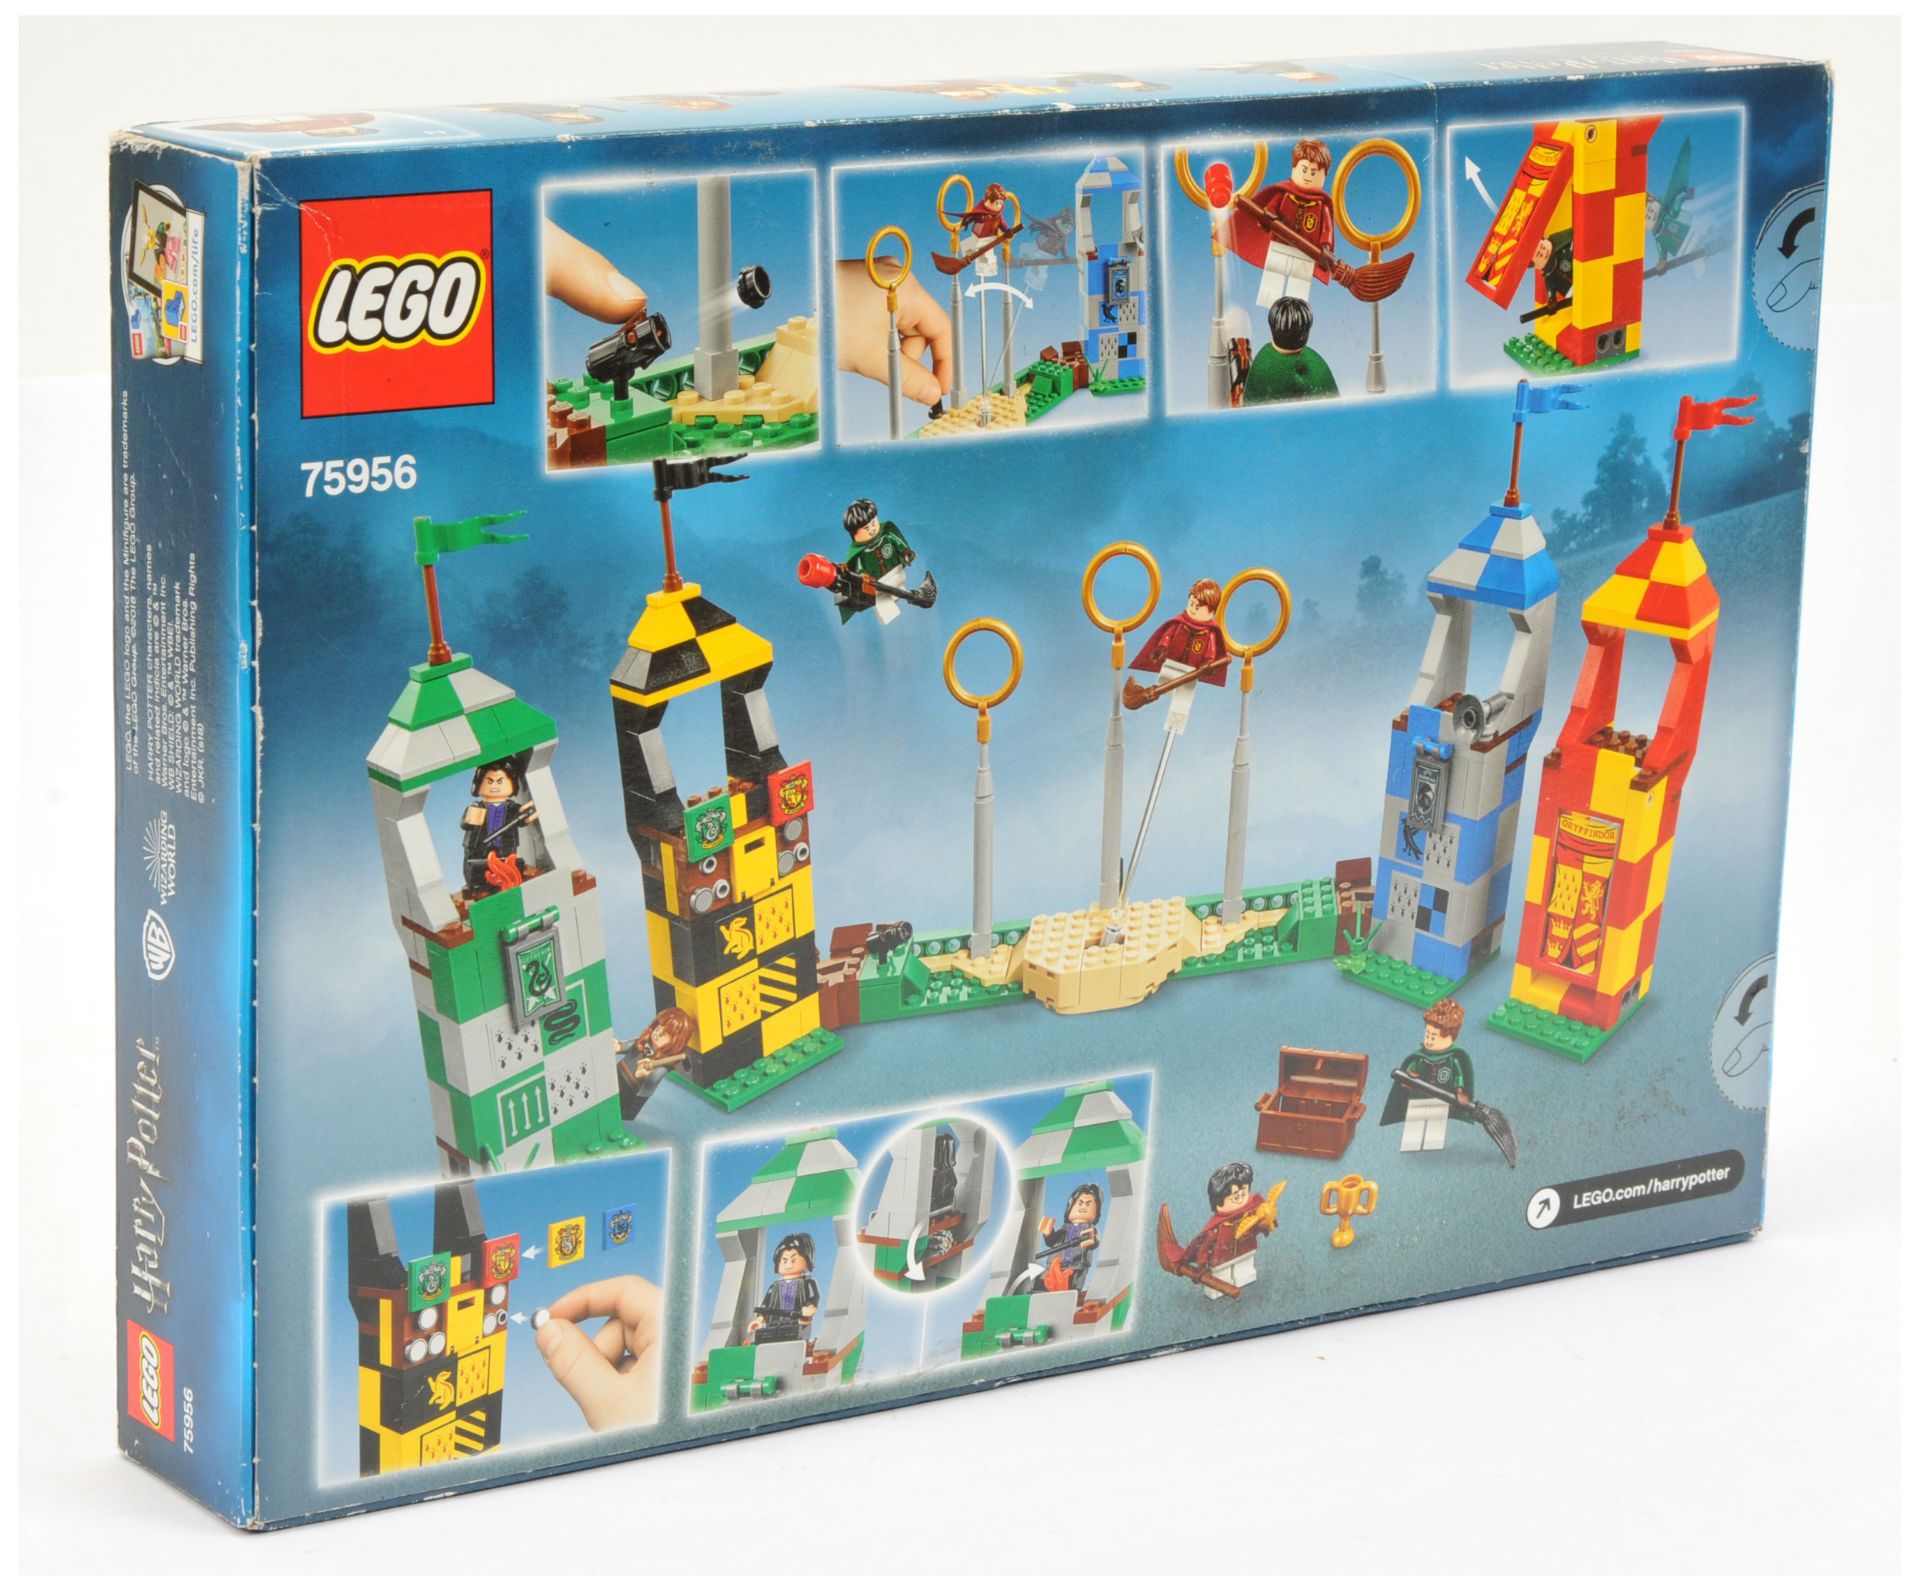 Lego Harry Potter 75956 Quidditch Match, within Good sealed packaging. - Bild 2 aus 2